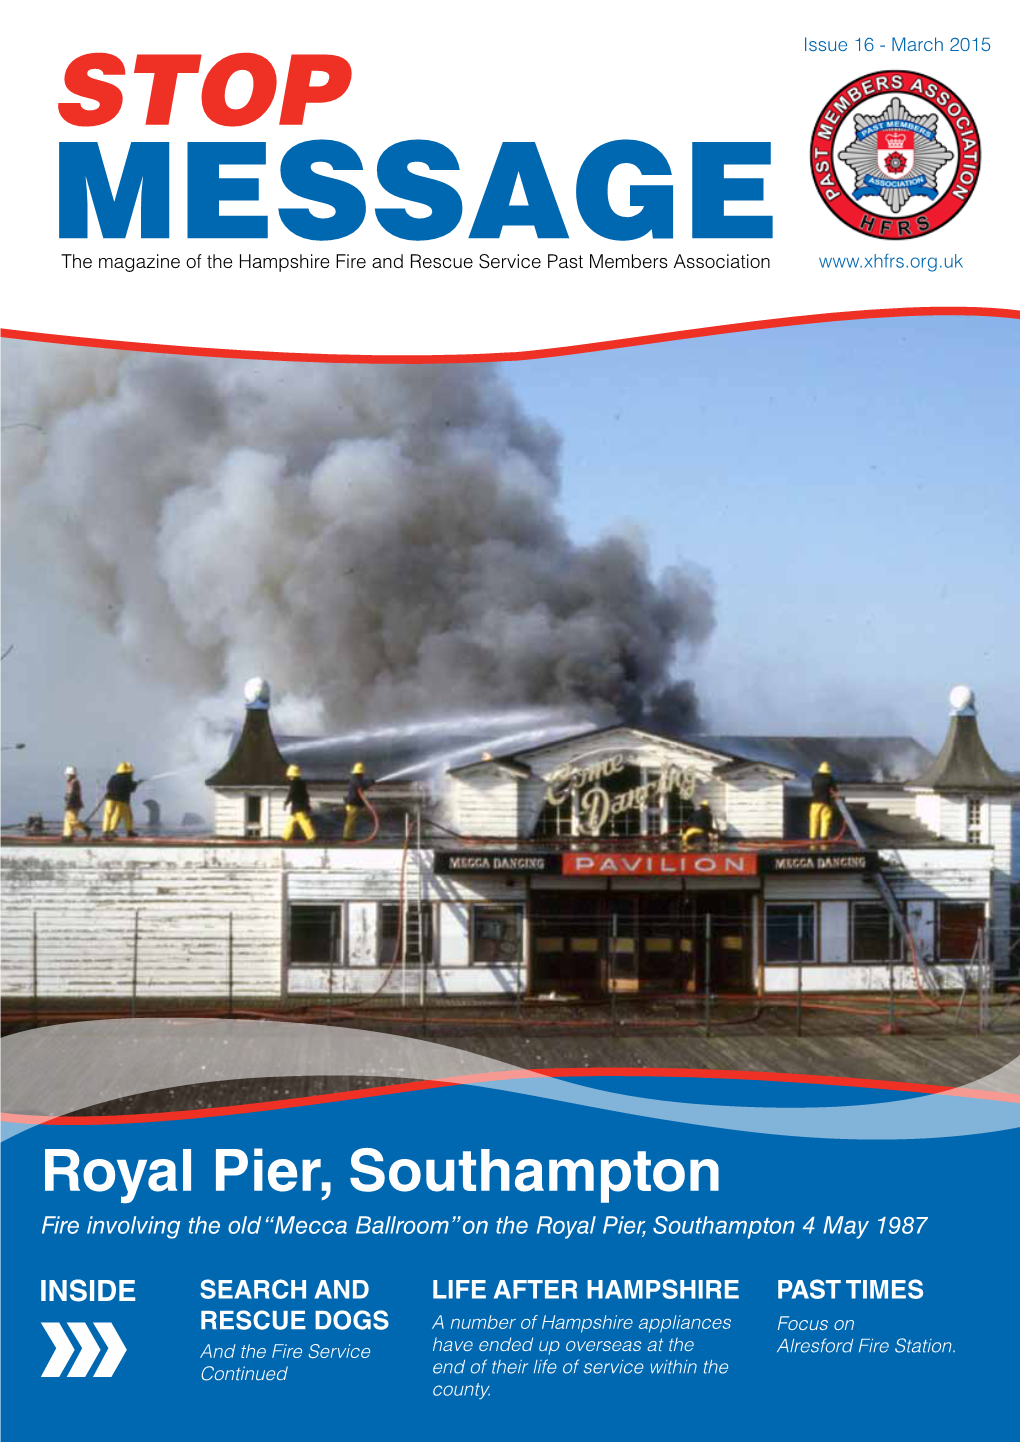 Royal Pier, Southampton Fire Involving the Old “Mecca Ballroom” on the Royal Pier, Southampton 4 May 1987